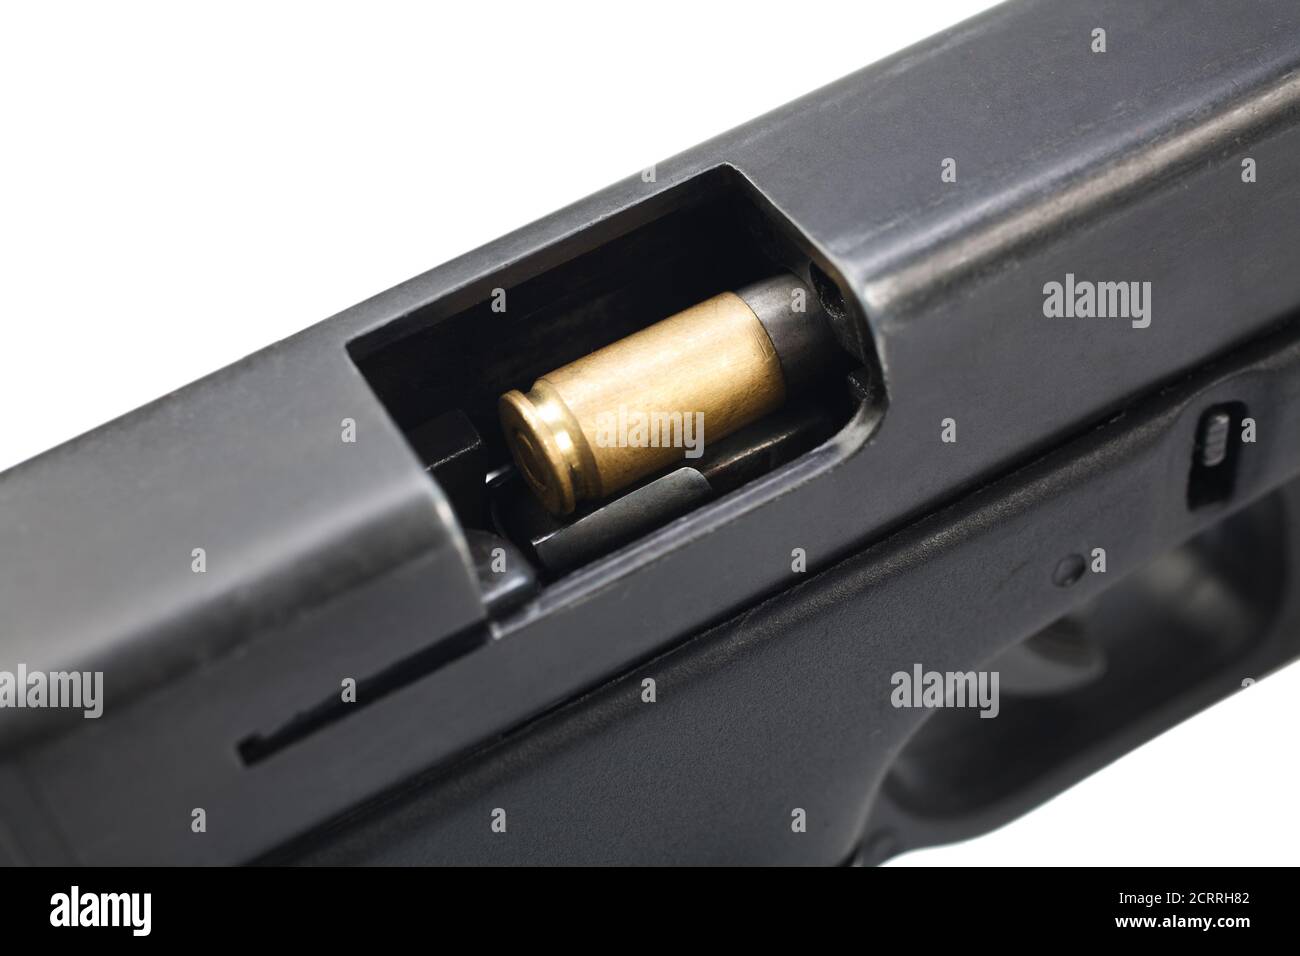 cartridge in the hand gun receiver Stock Photo